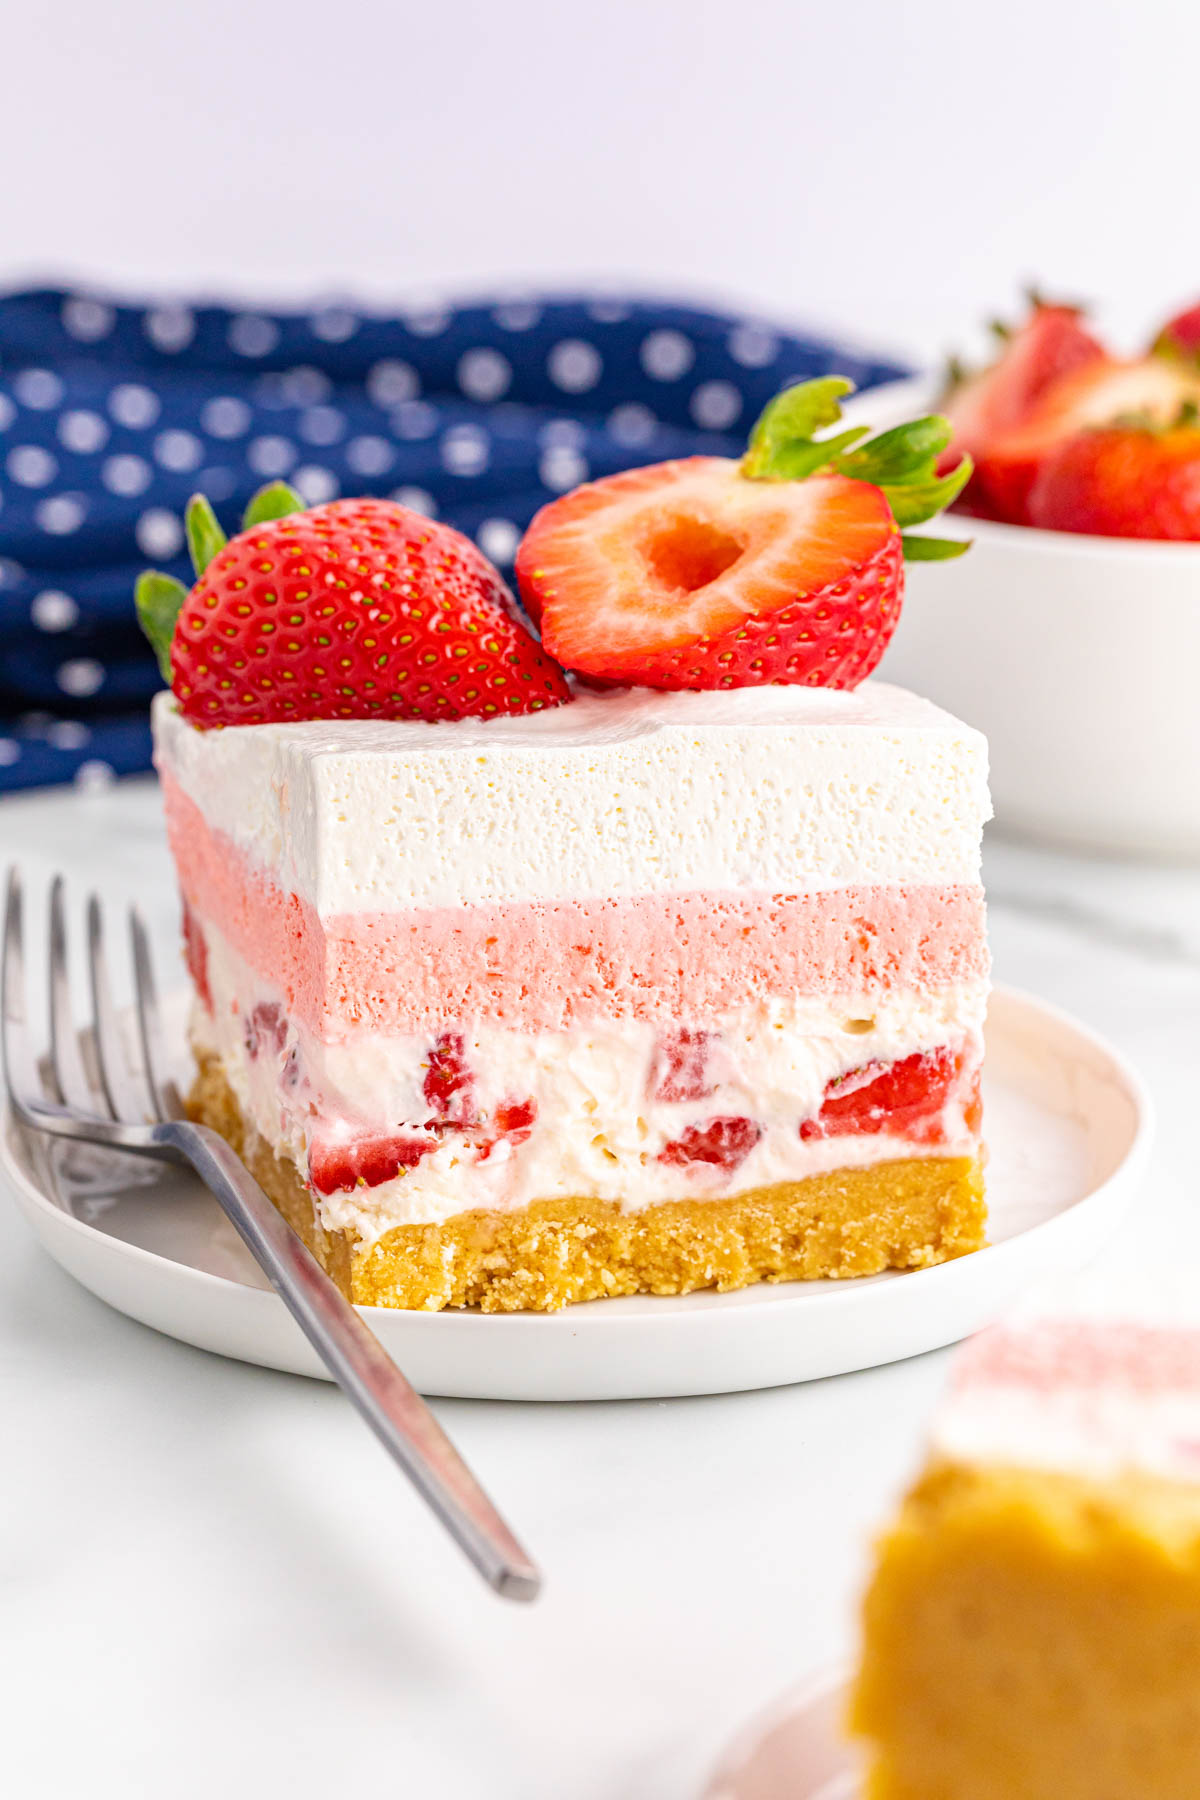 Strawberry cheesecake lush with Golden Oreo crust